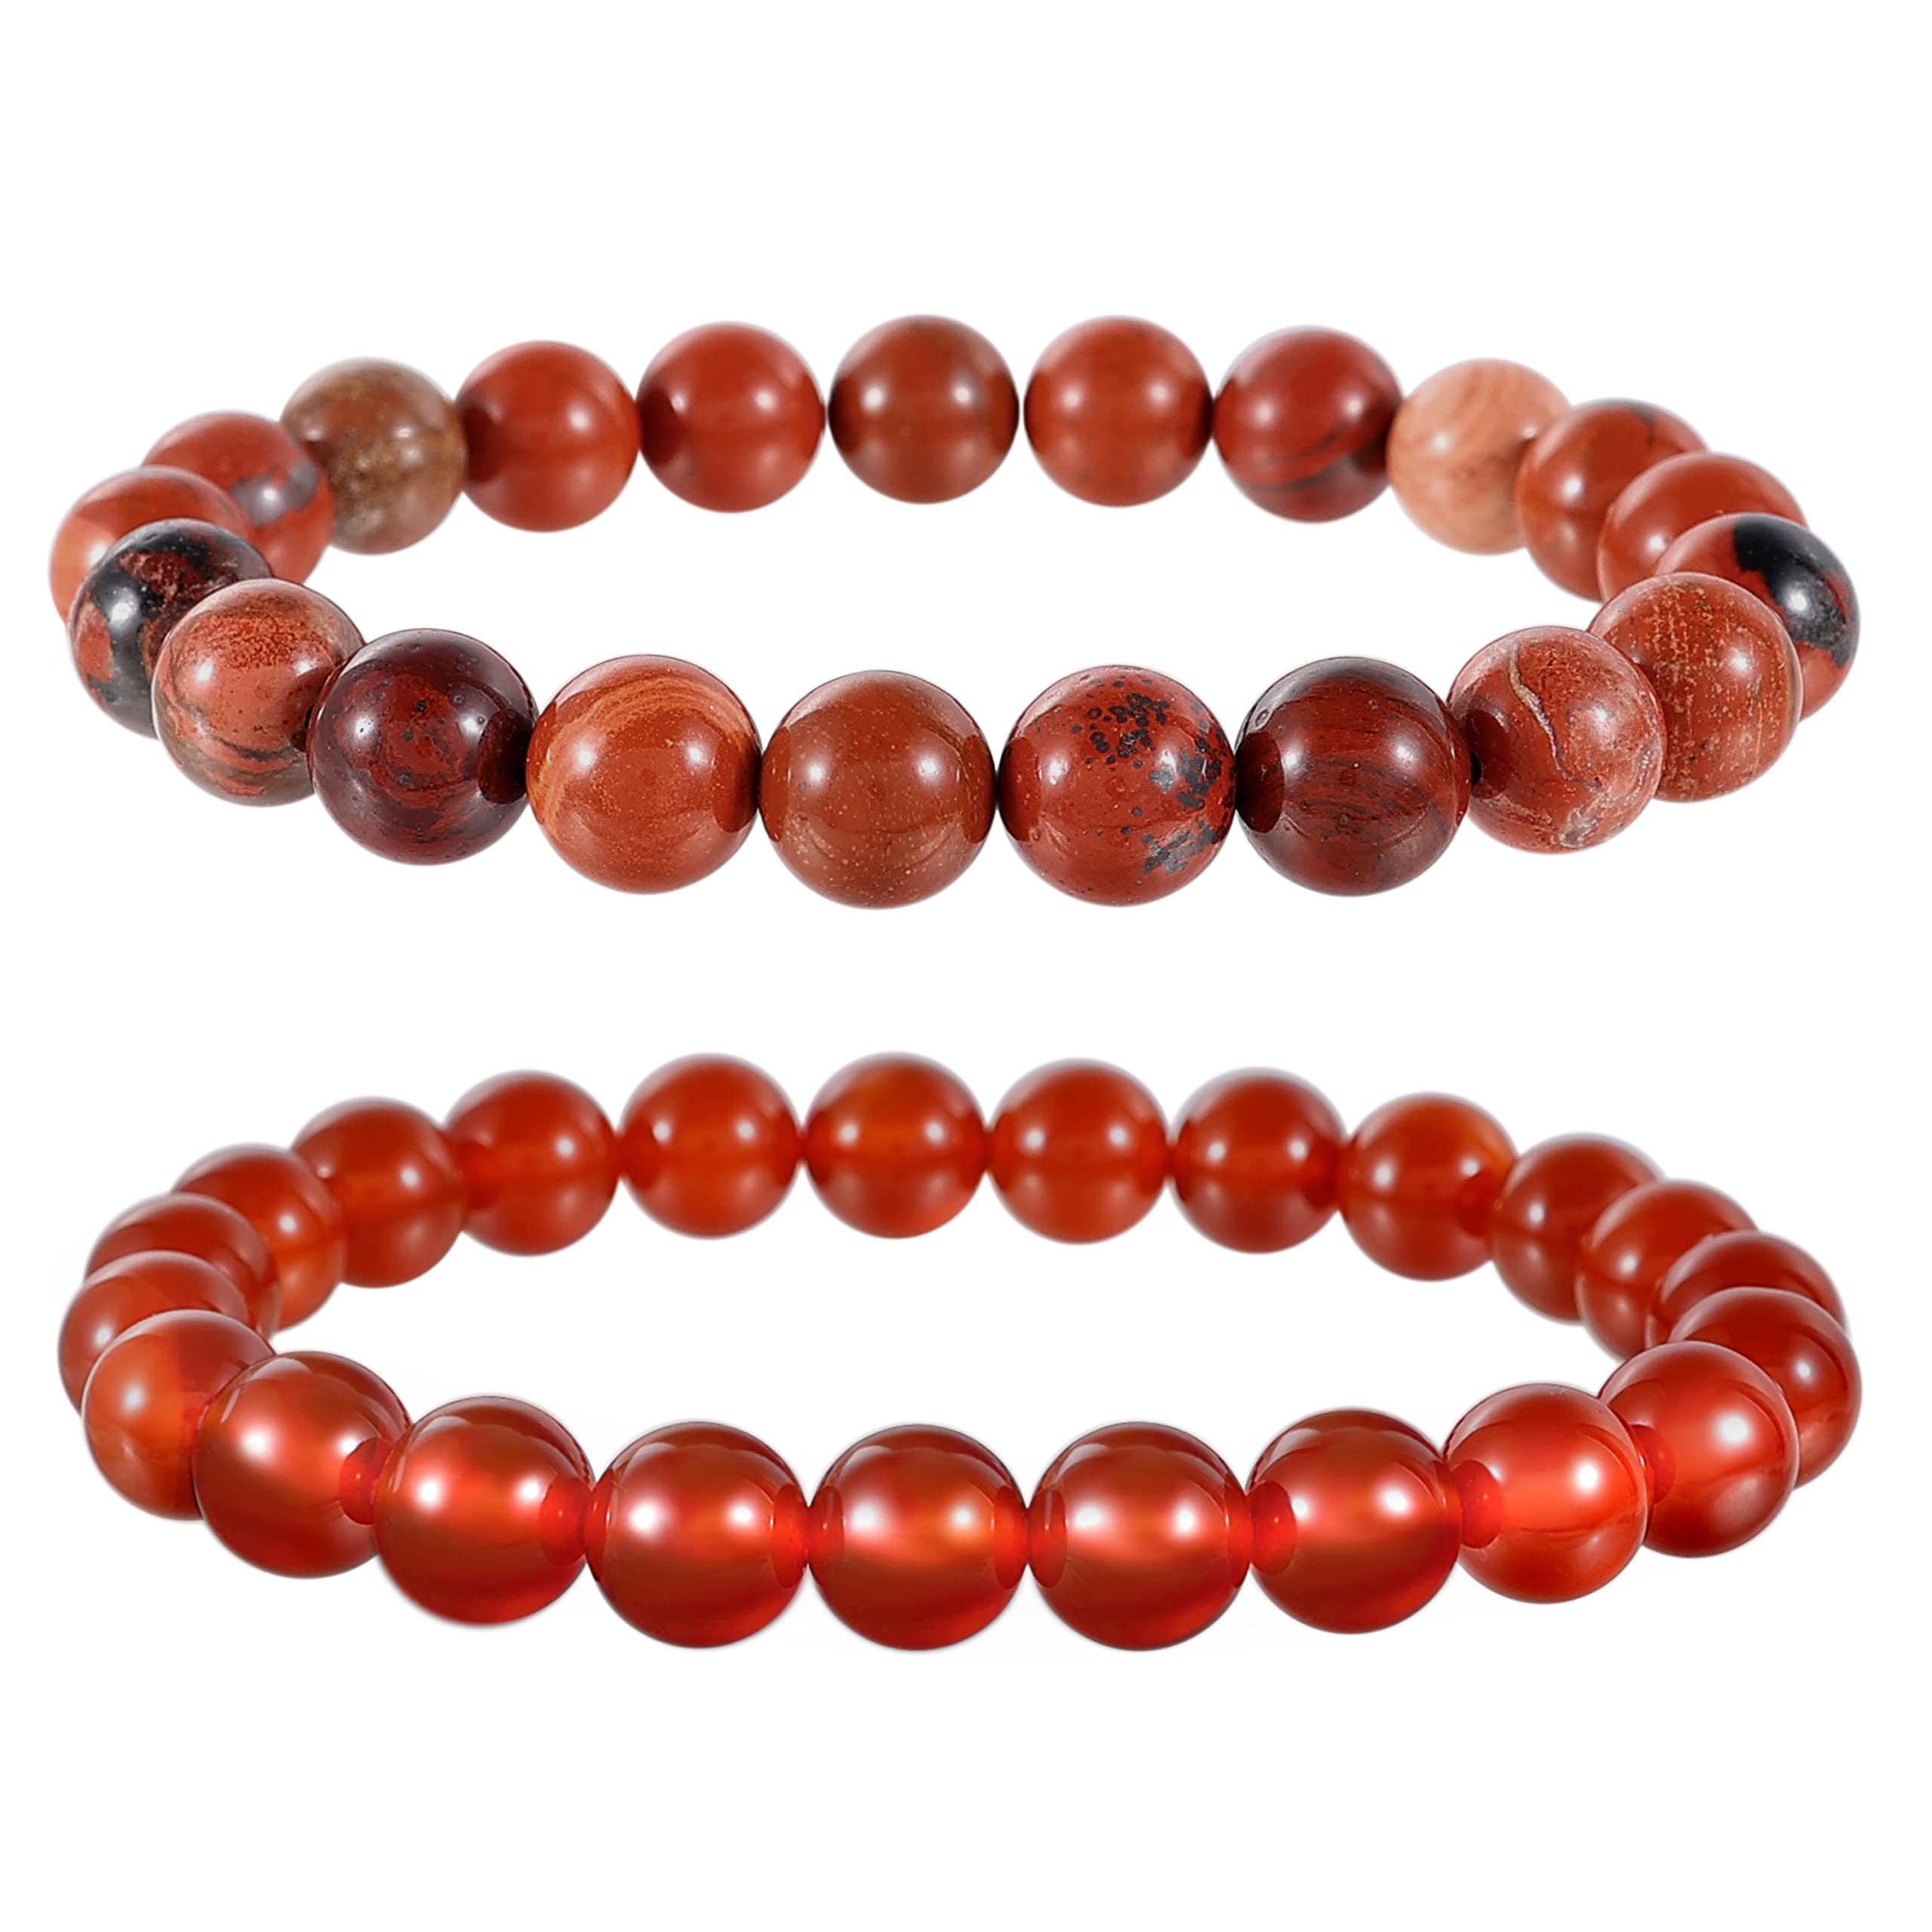 Bivei Natural Gem Semi Precious Reiki Healing Crystals Handmade 8mm Round Beads Stretch Bracelet #2 Red Jasper + Red Agate